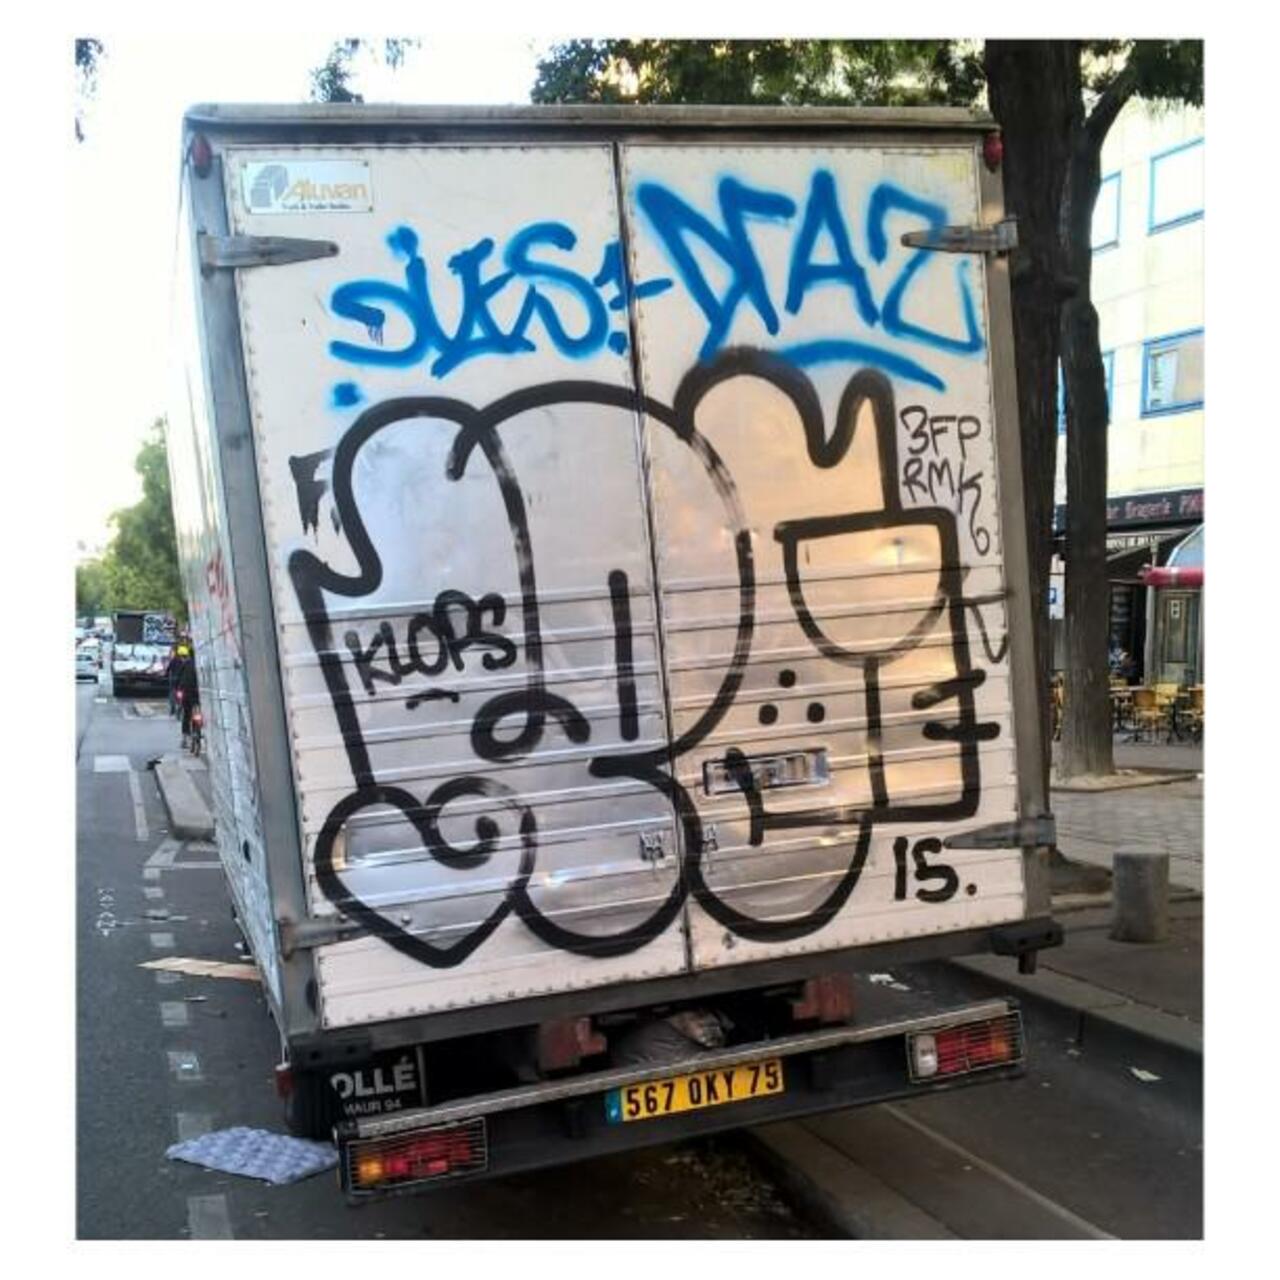 #Paris #graffiti photo by @maxdimontemarciano http://ift.tt/1L79Jx3 #StreetArt http://t.co/dp4HVSyLe7